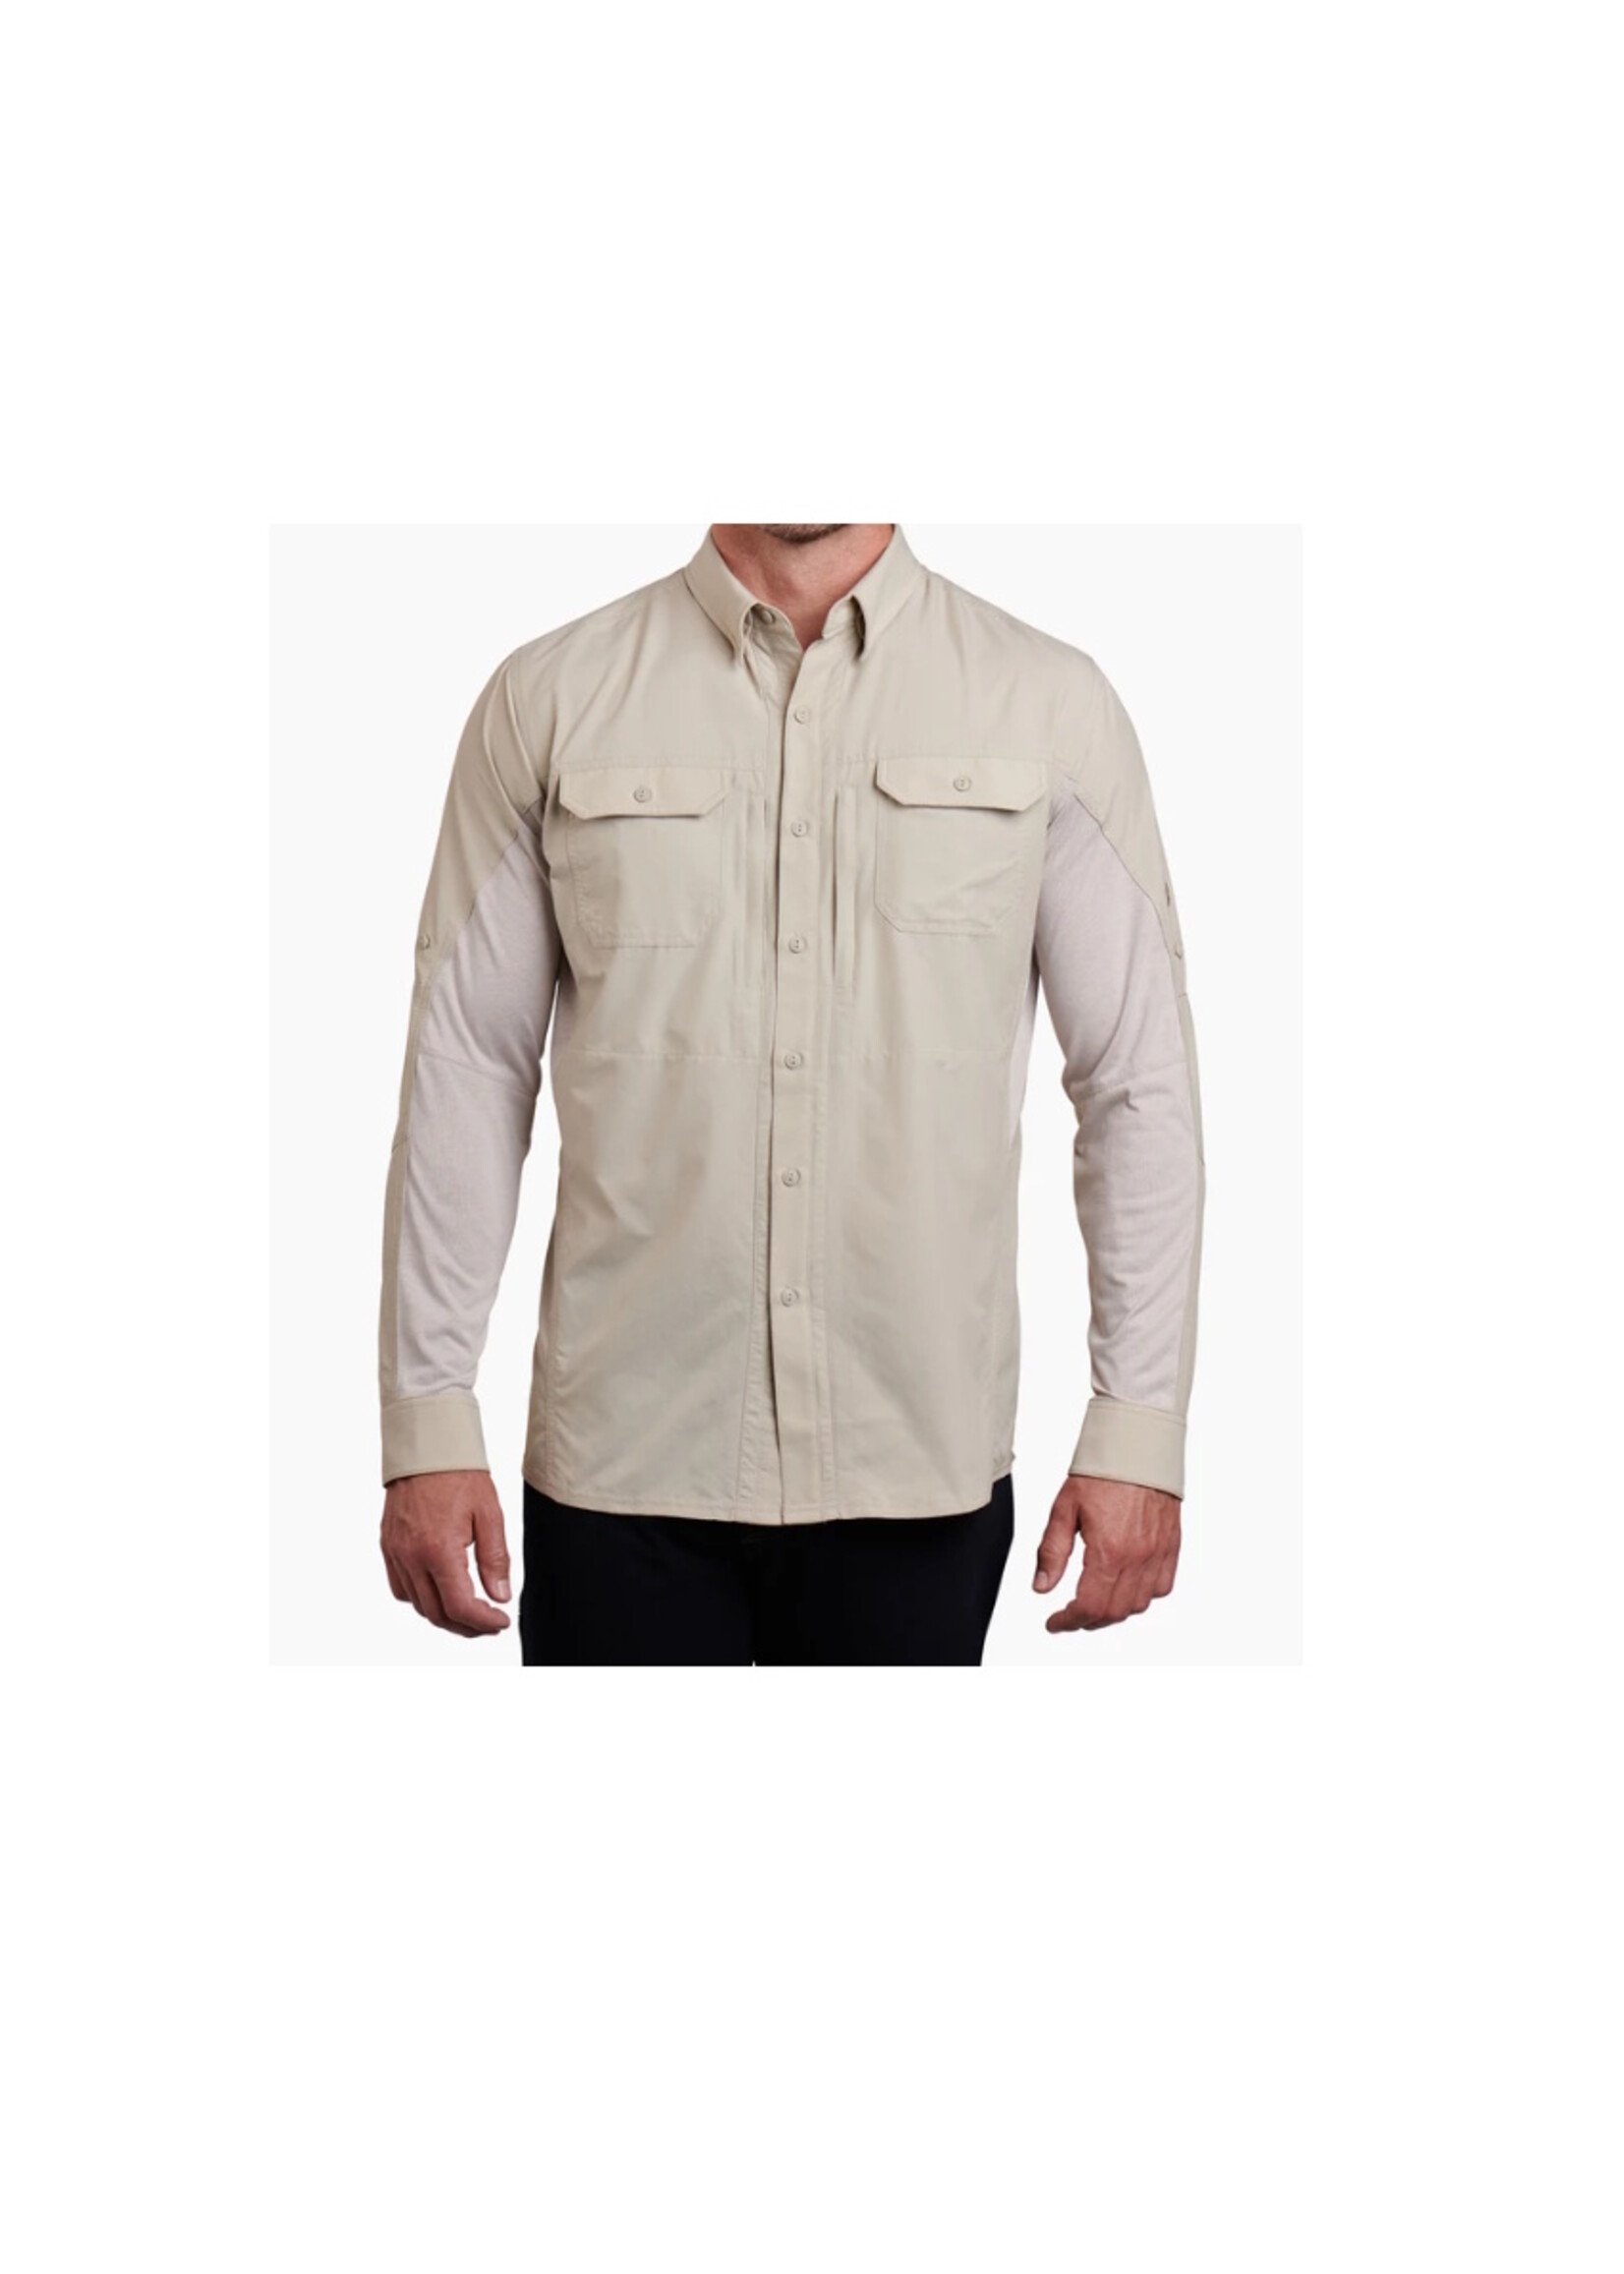 Kuhl Men's Airspeed Long Sleeve Button Up Shirt